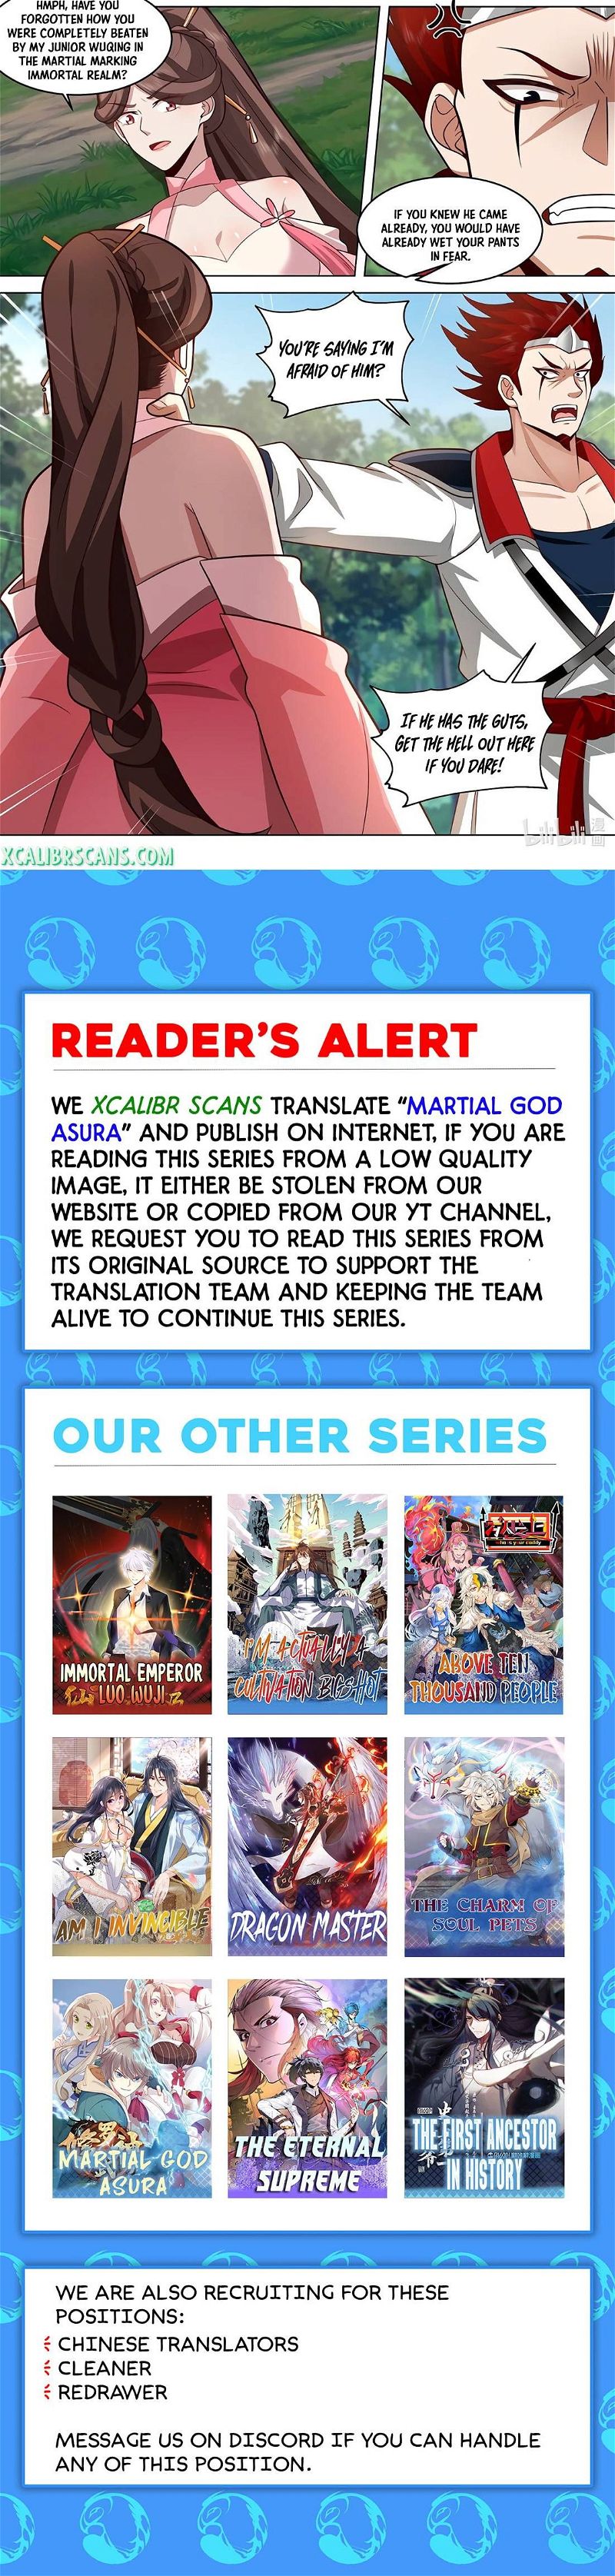 Martial God Asura Chapter 510 page 10